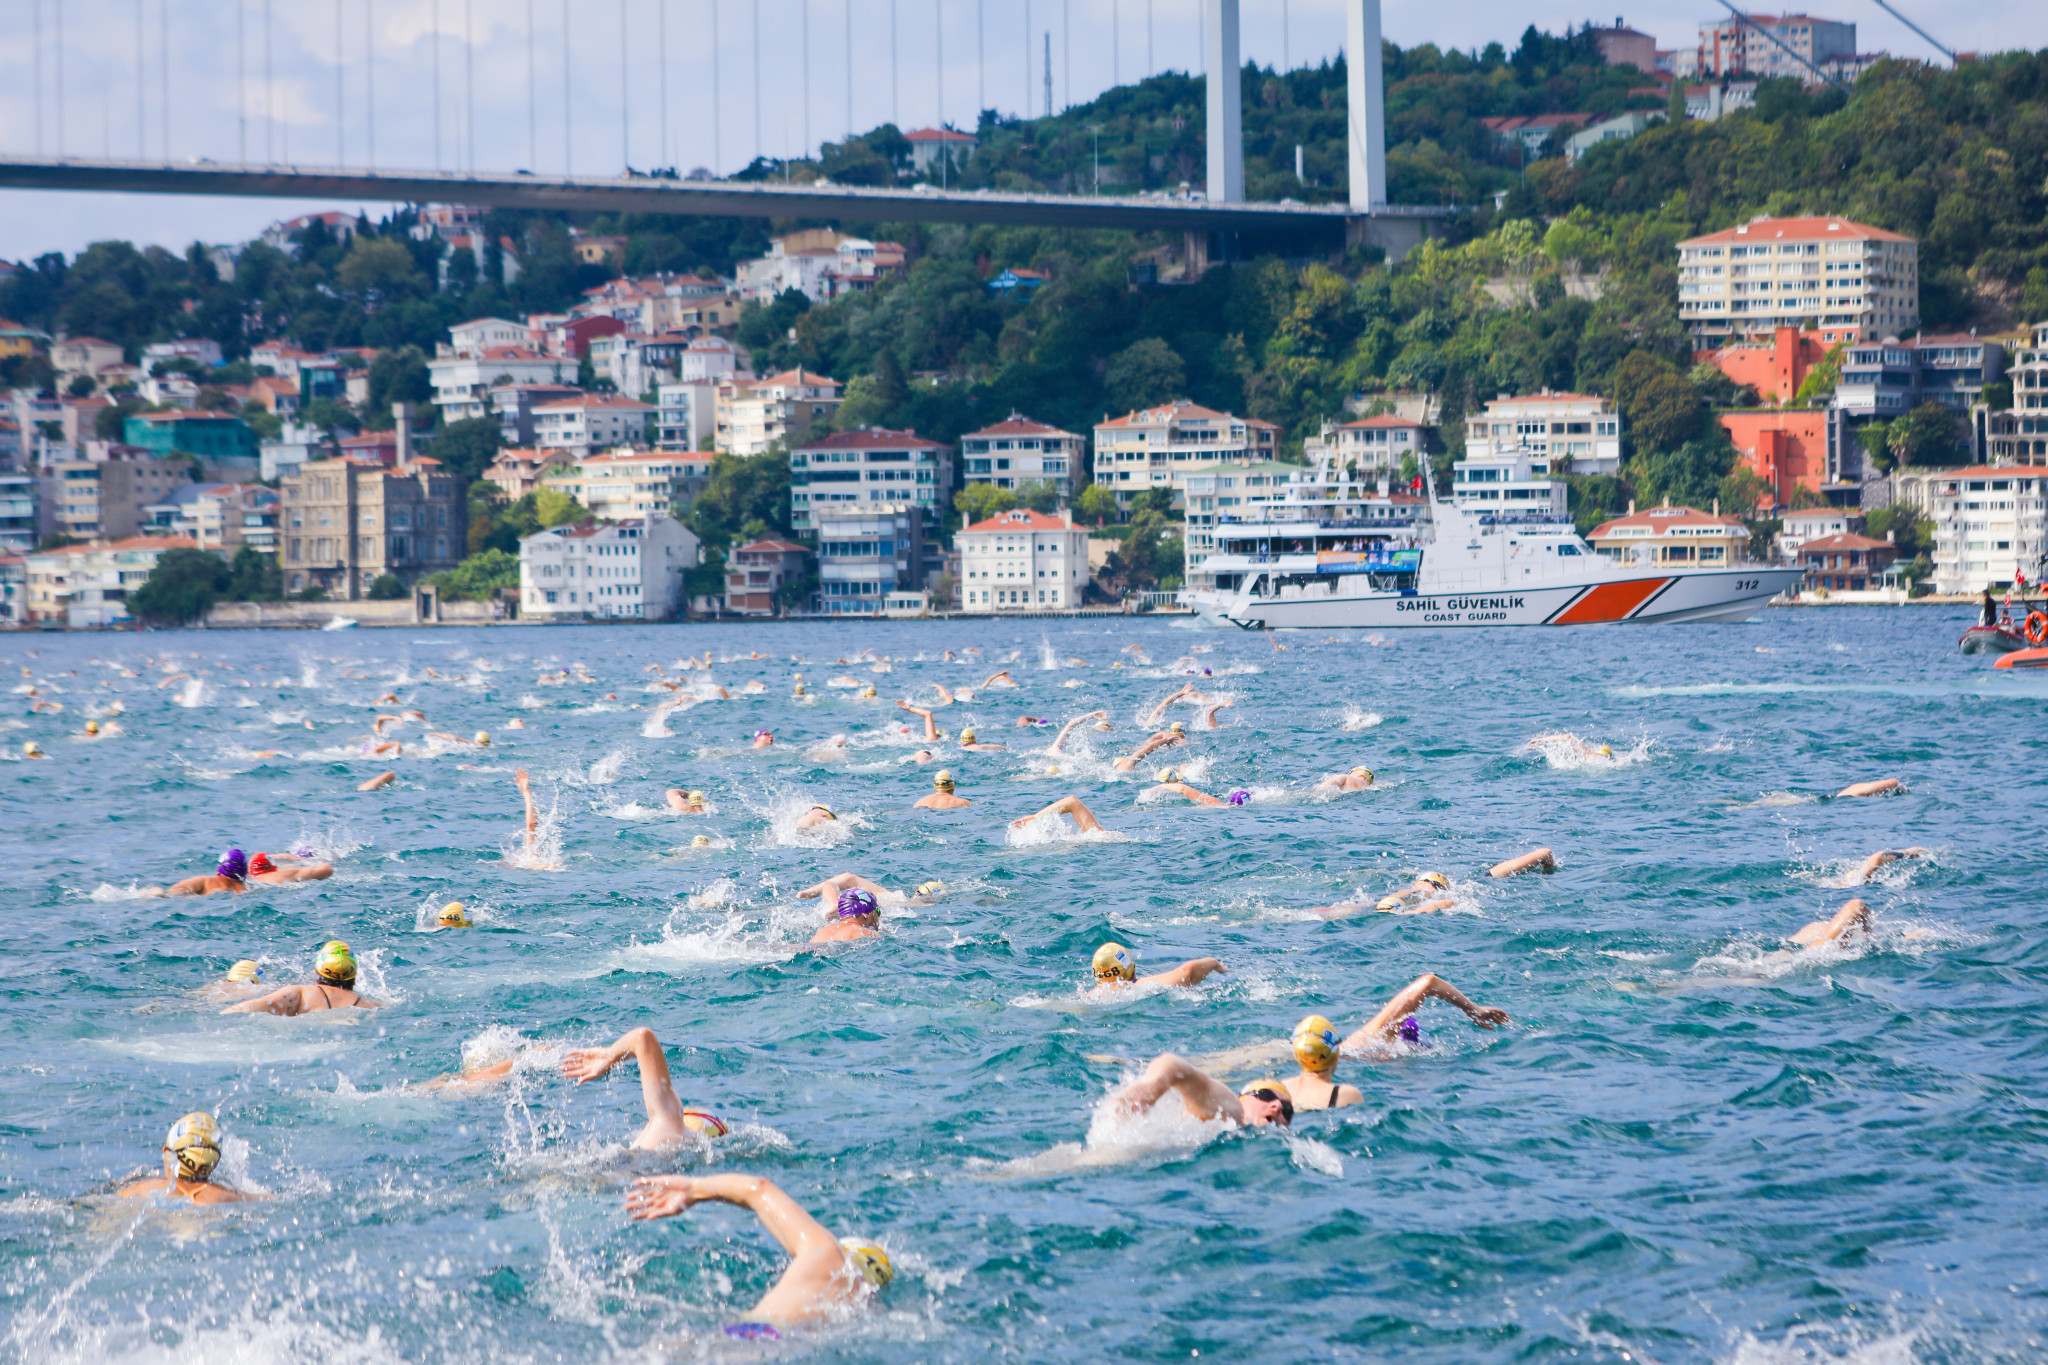 Üstündağ and Turnalı win Bosphorus Cross-Continental Swimming Race organised by Turkish NOC